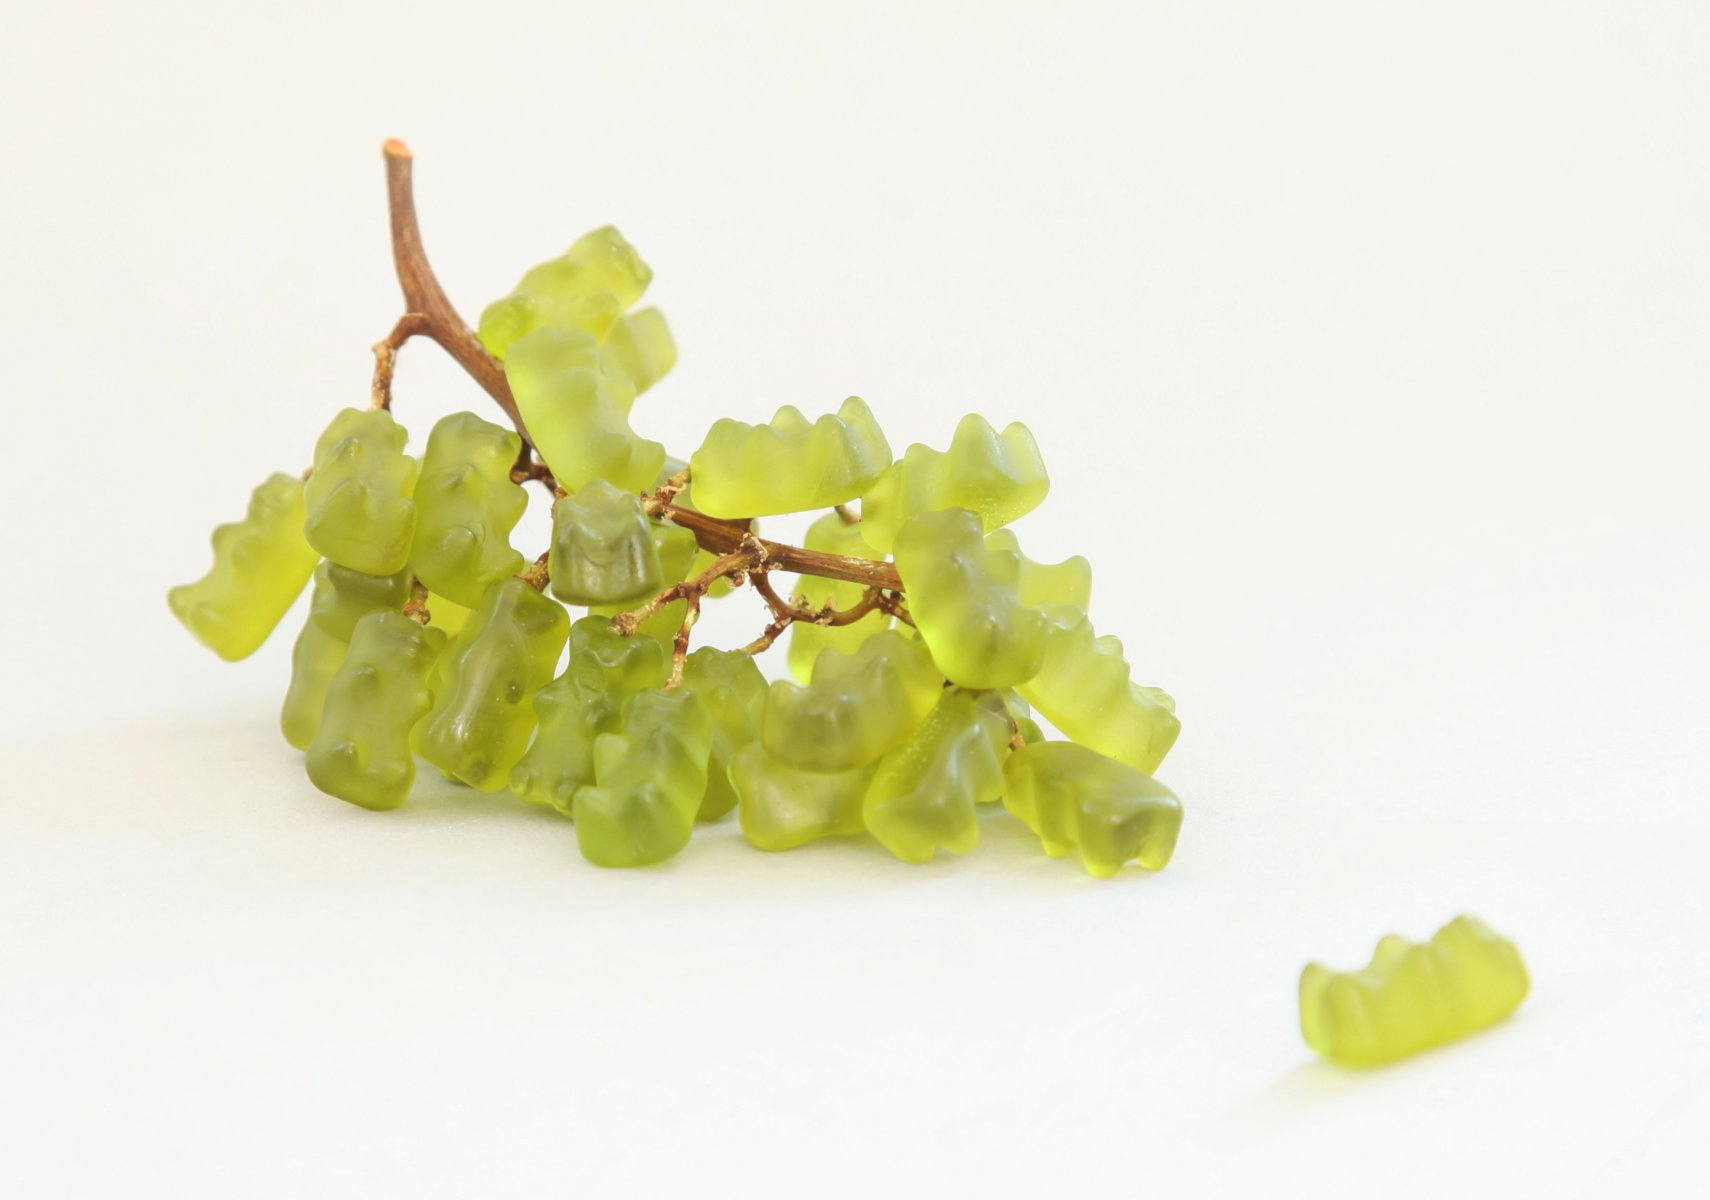 My Kind of Grapes - Helga Stentzel